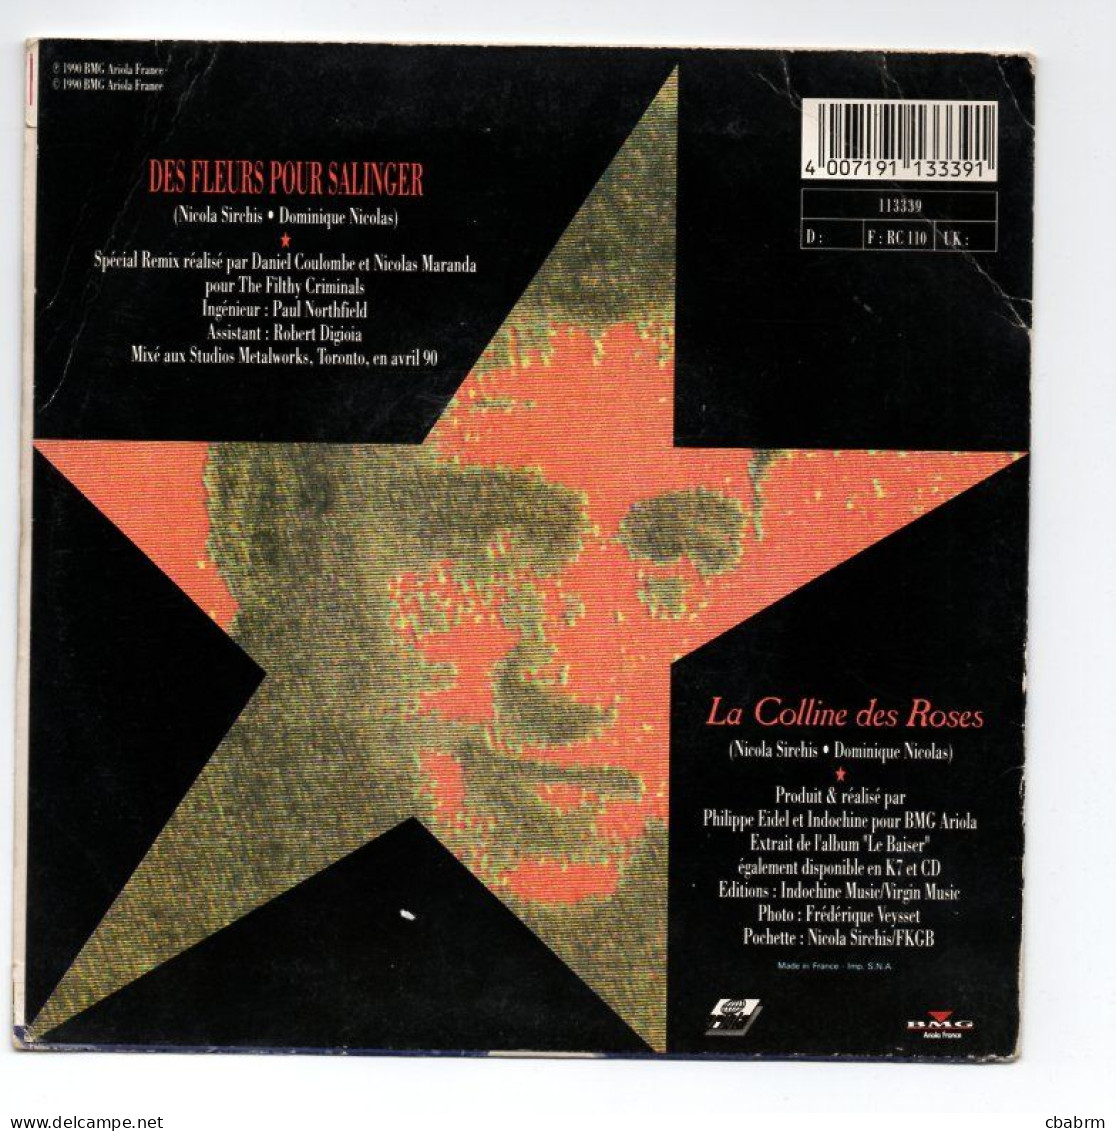 SP 45 TOURS INDOCHINE DES FLEURS POUR SALINGER 1990 FRANCE BMG 113339 - 7" - Other - French Music